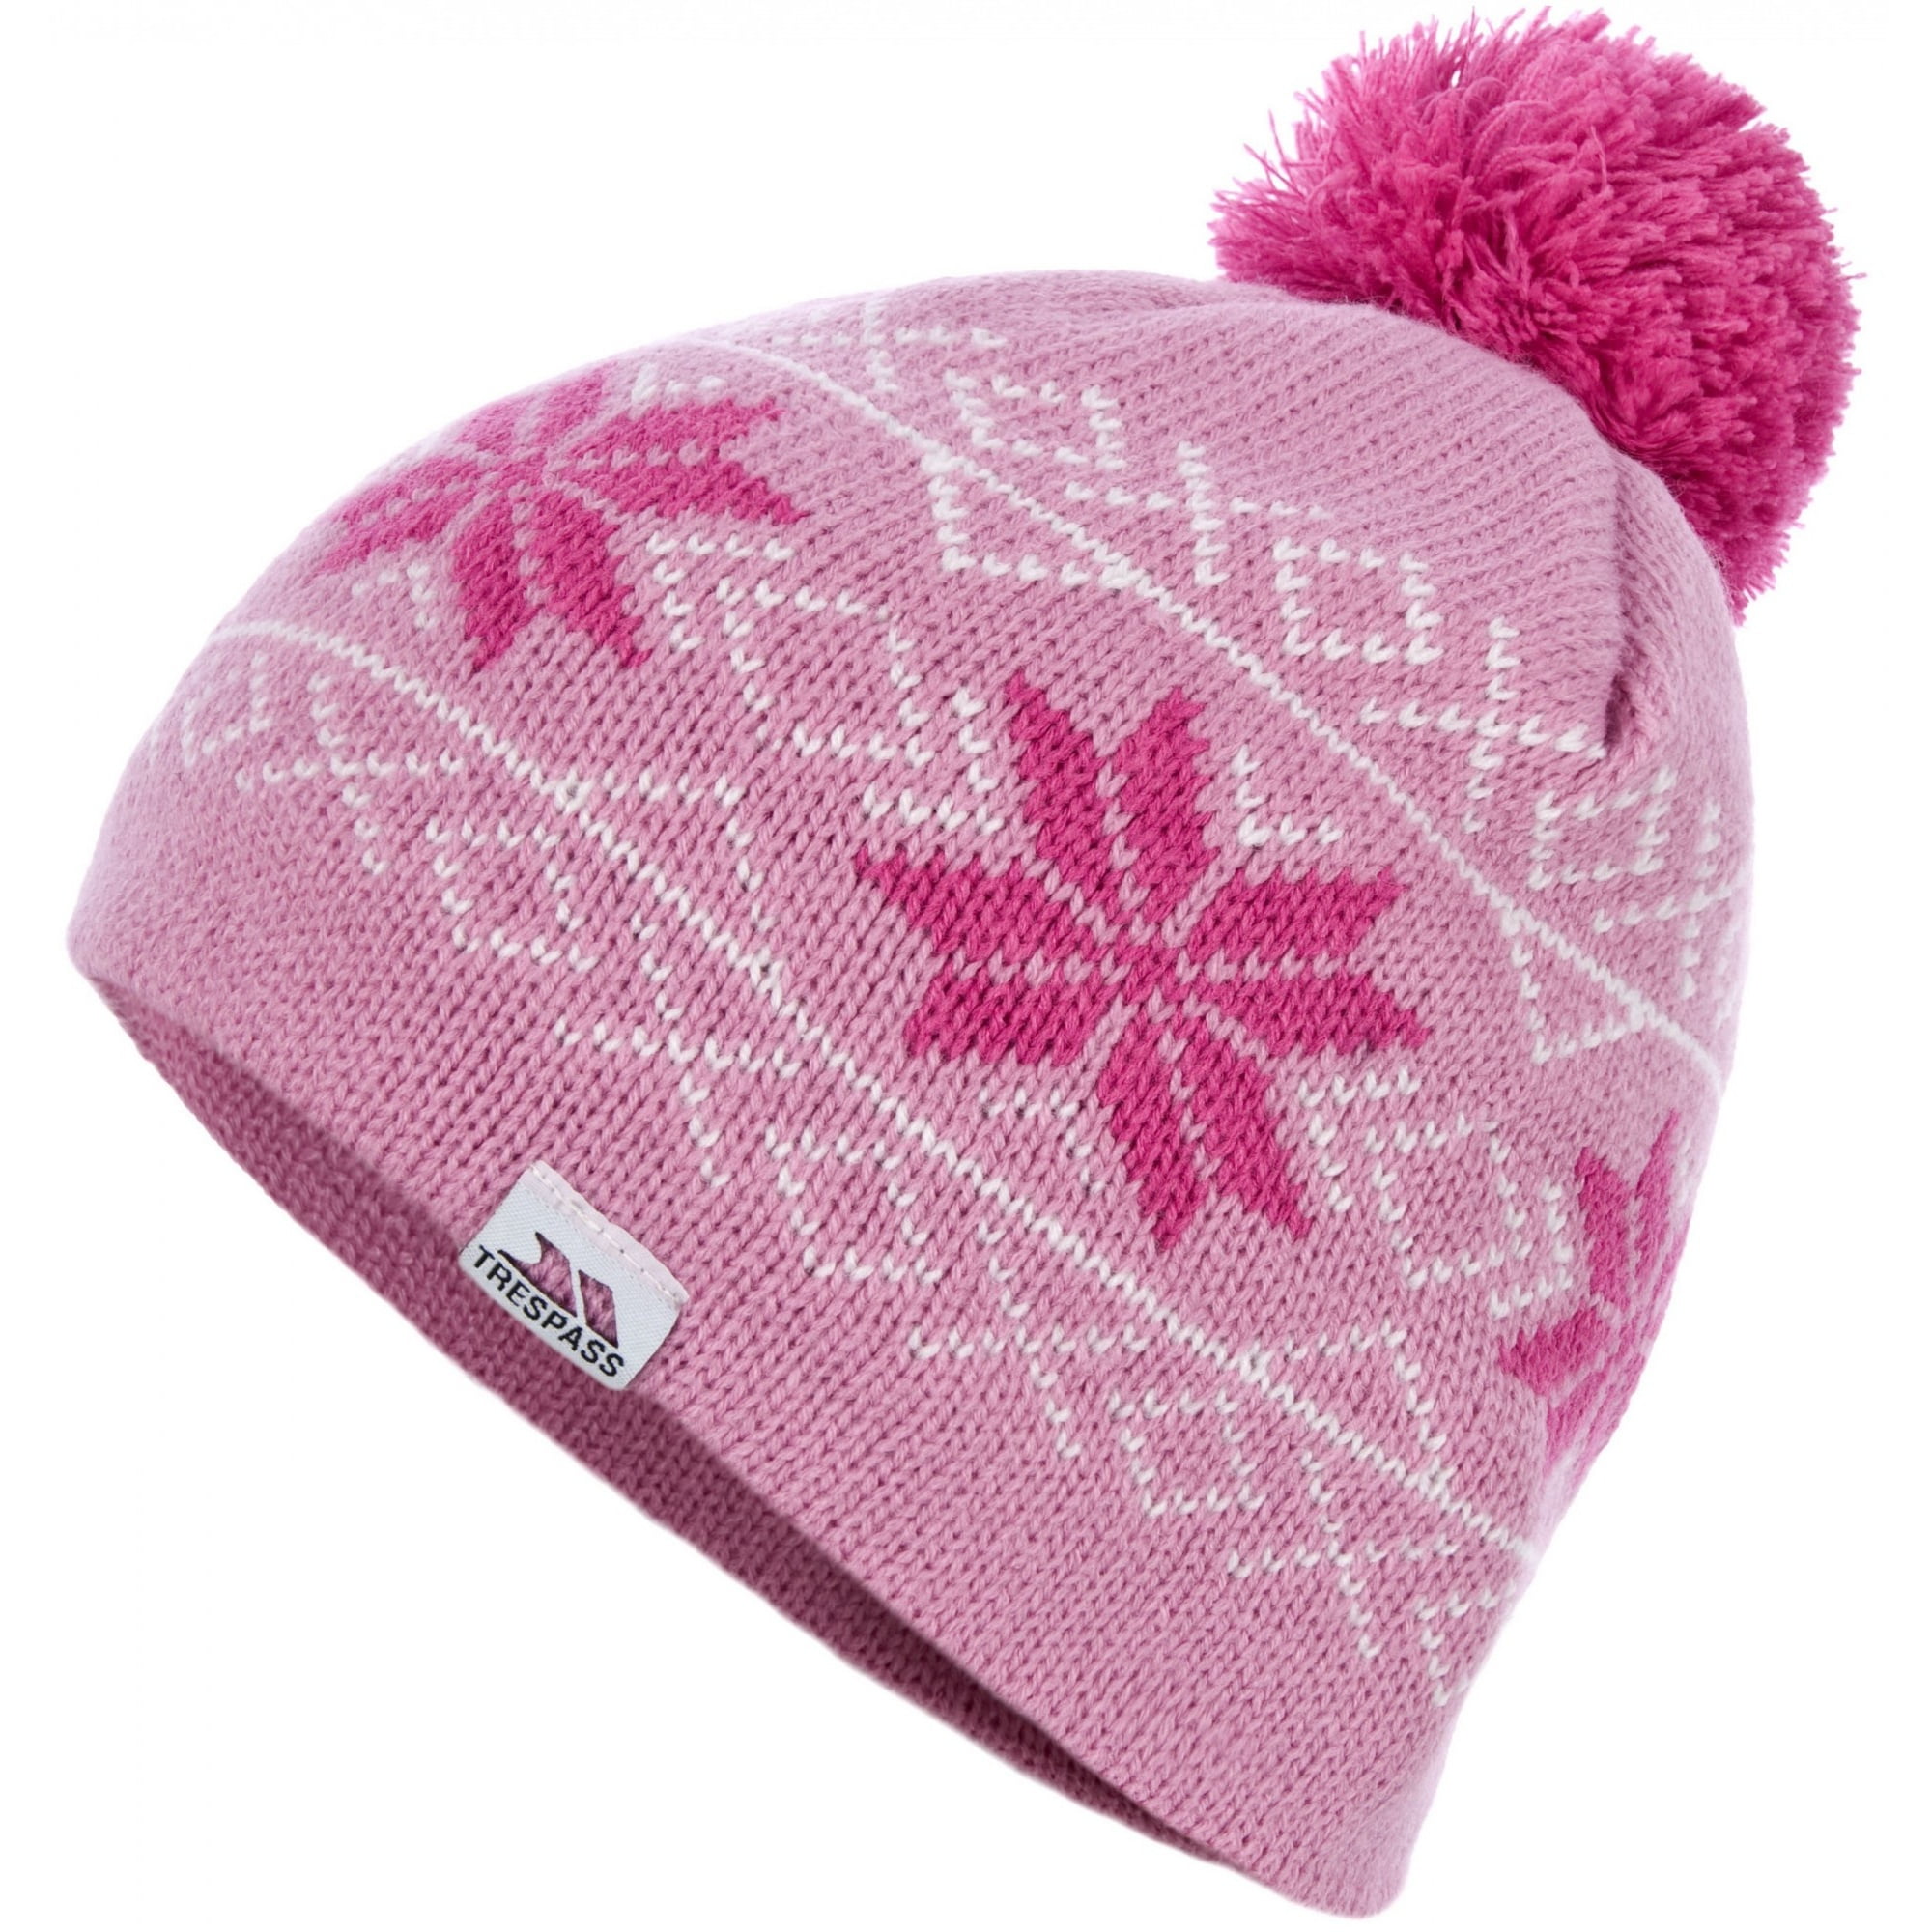 Trespass Candy Girls Beanie Hat With Bobble Pom Pom For Winter 